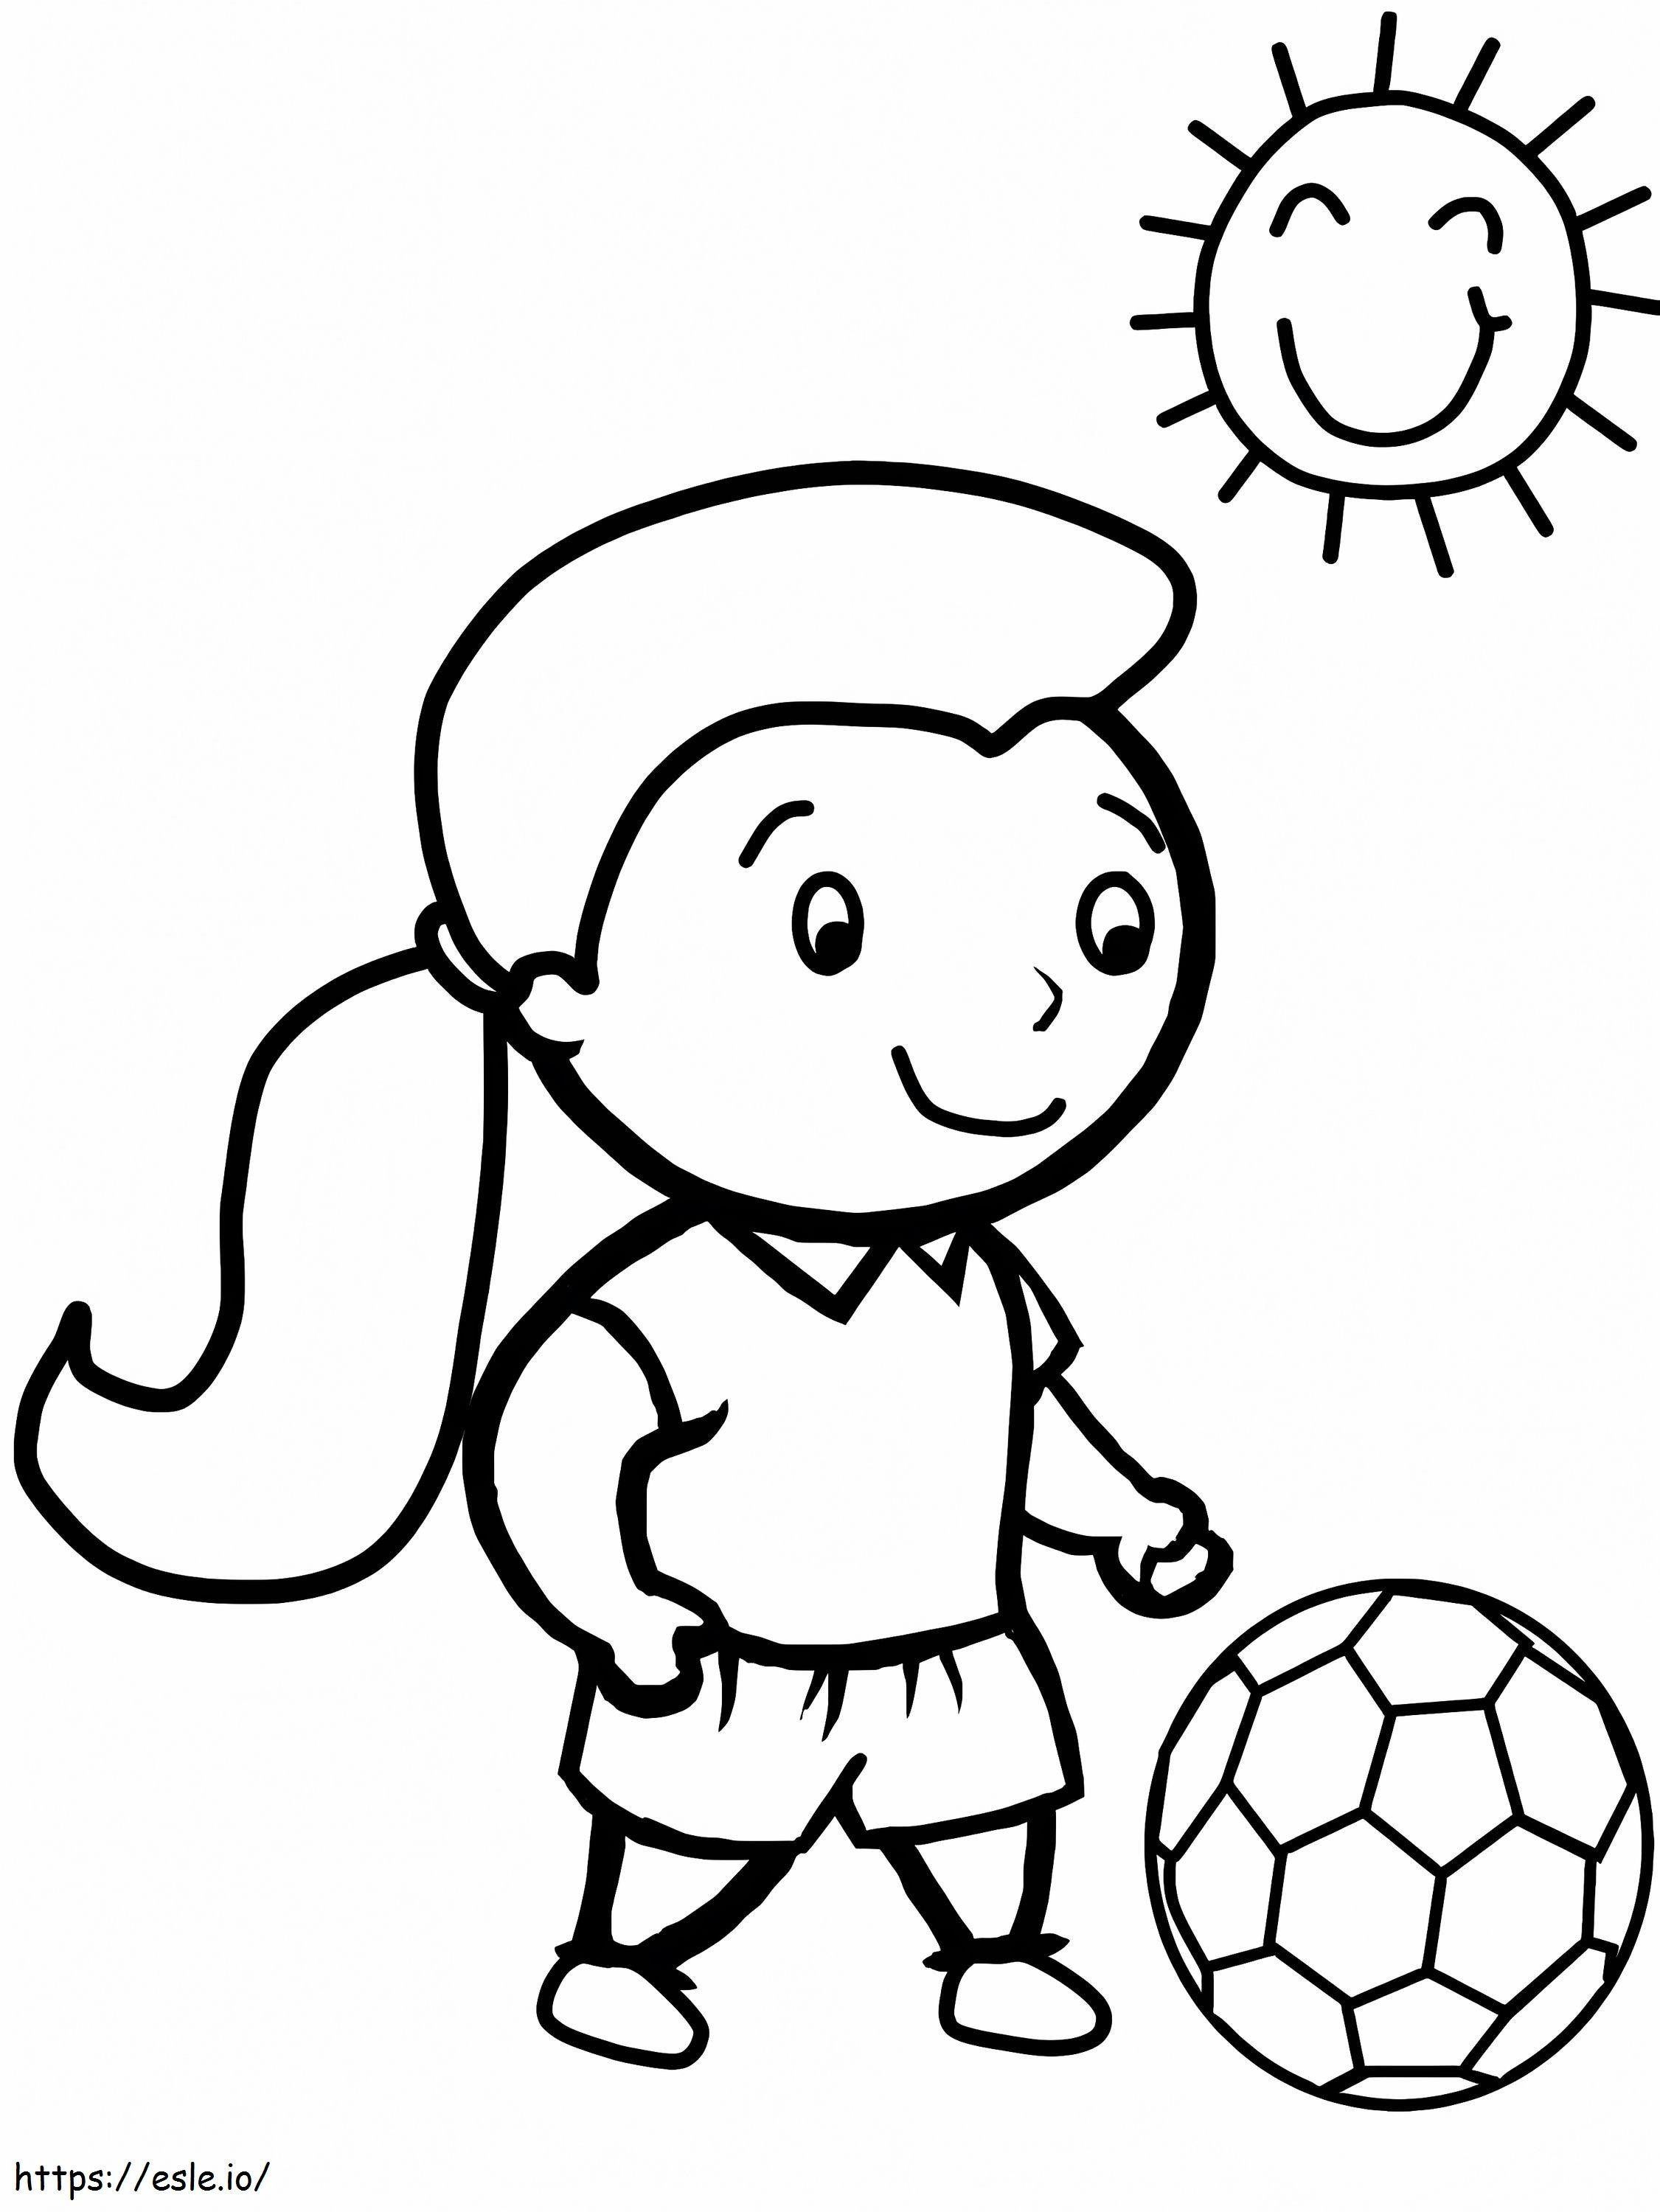 Menina jogando futebol 1 para colorir